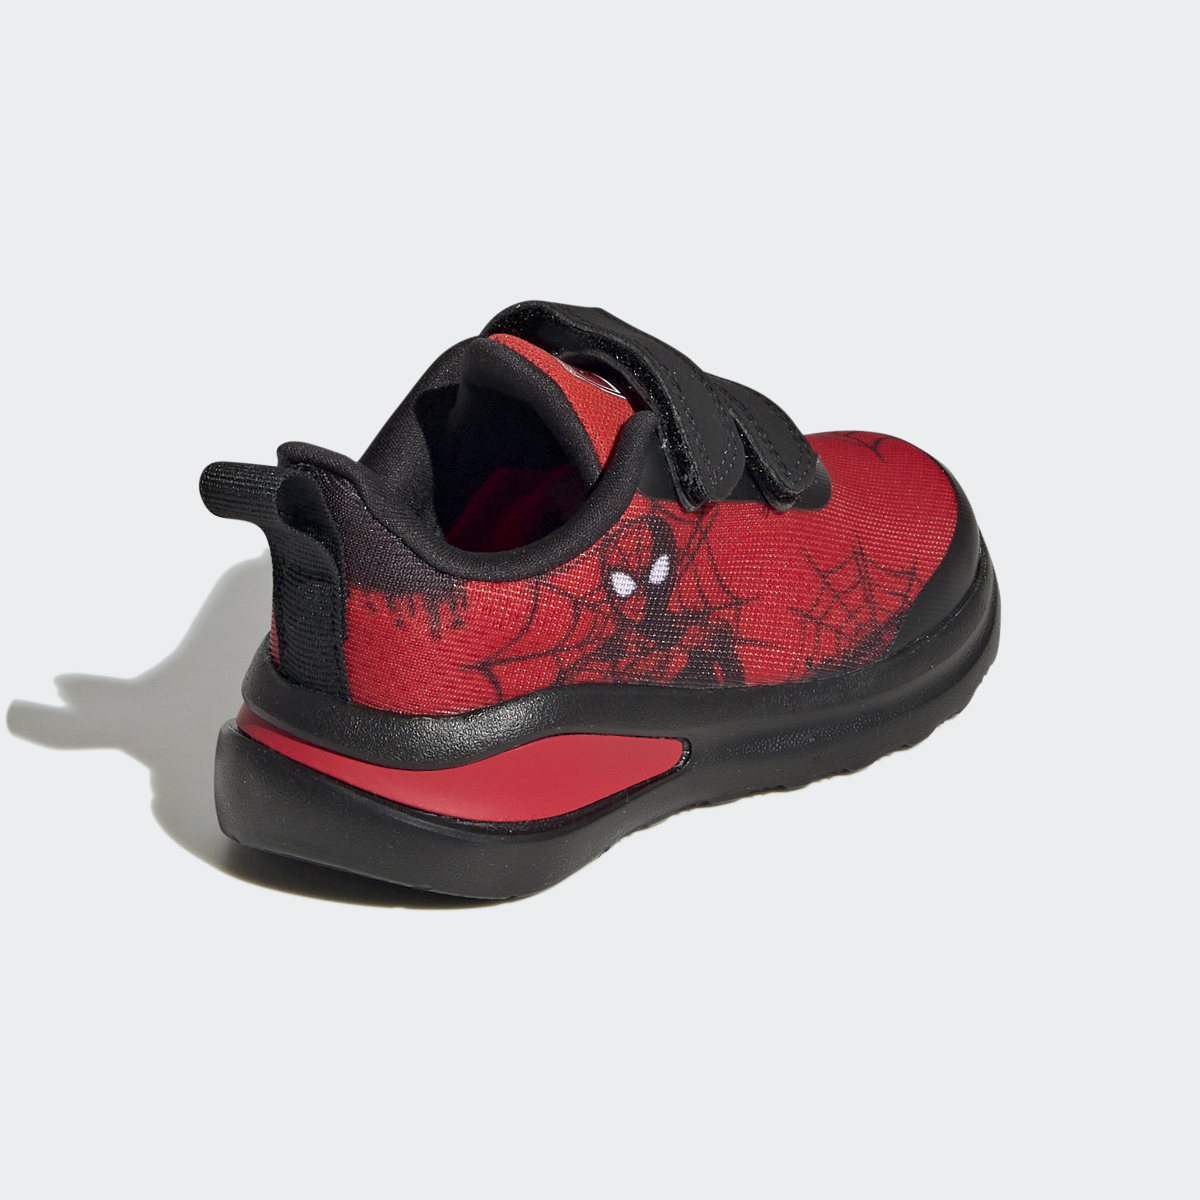 Adidas x Marvel Spider-Man Fortarun Shoes. 6